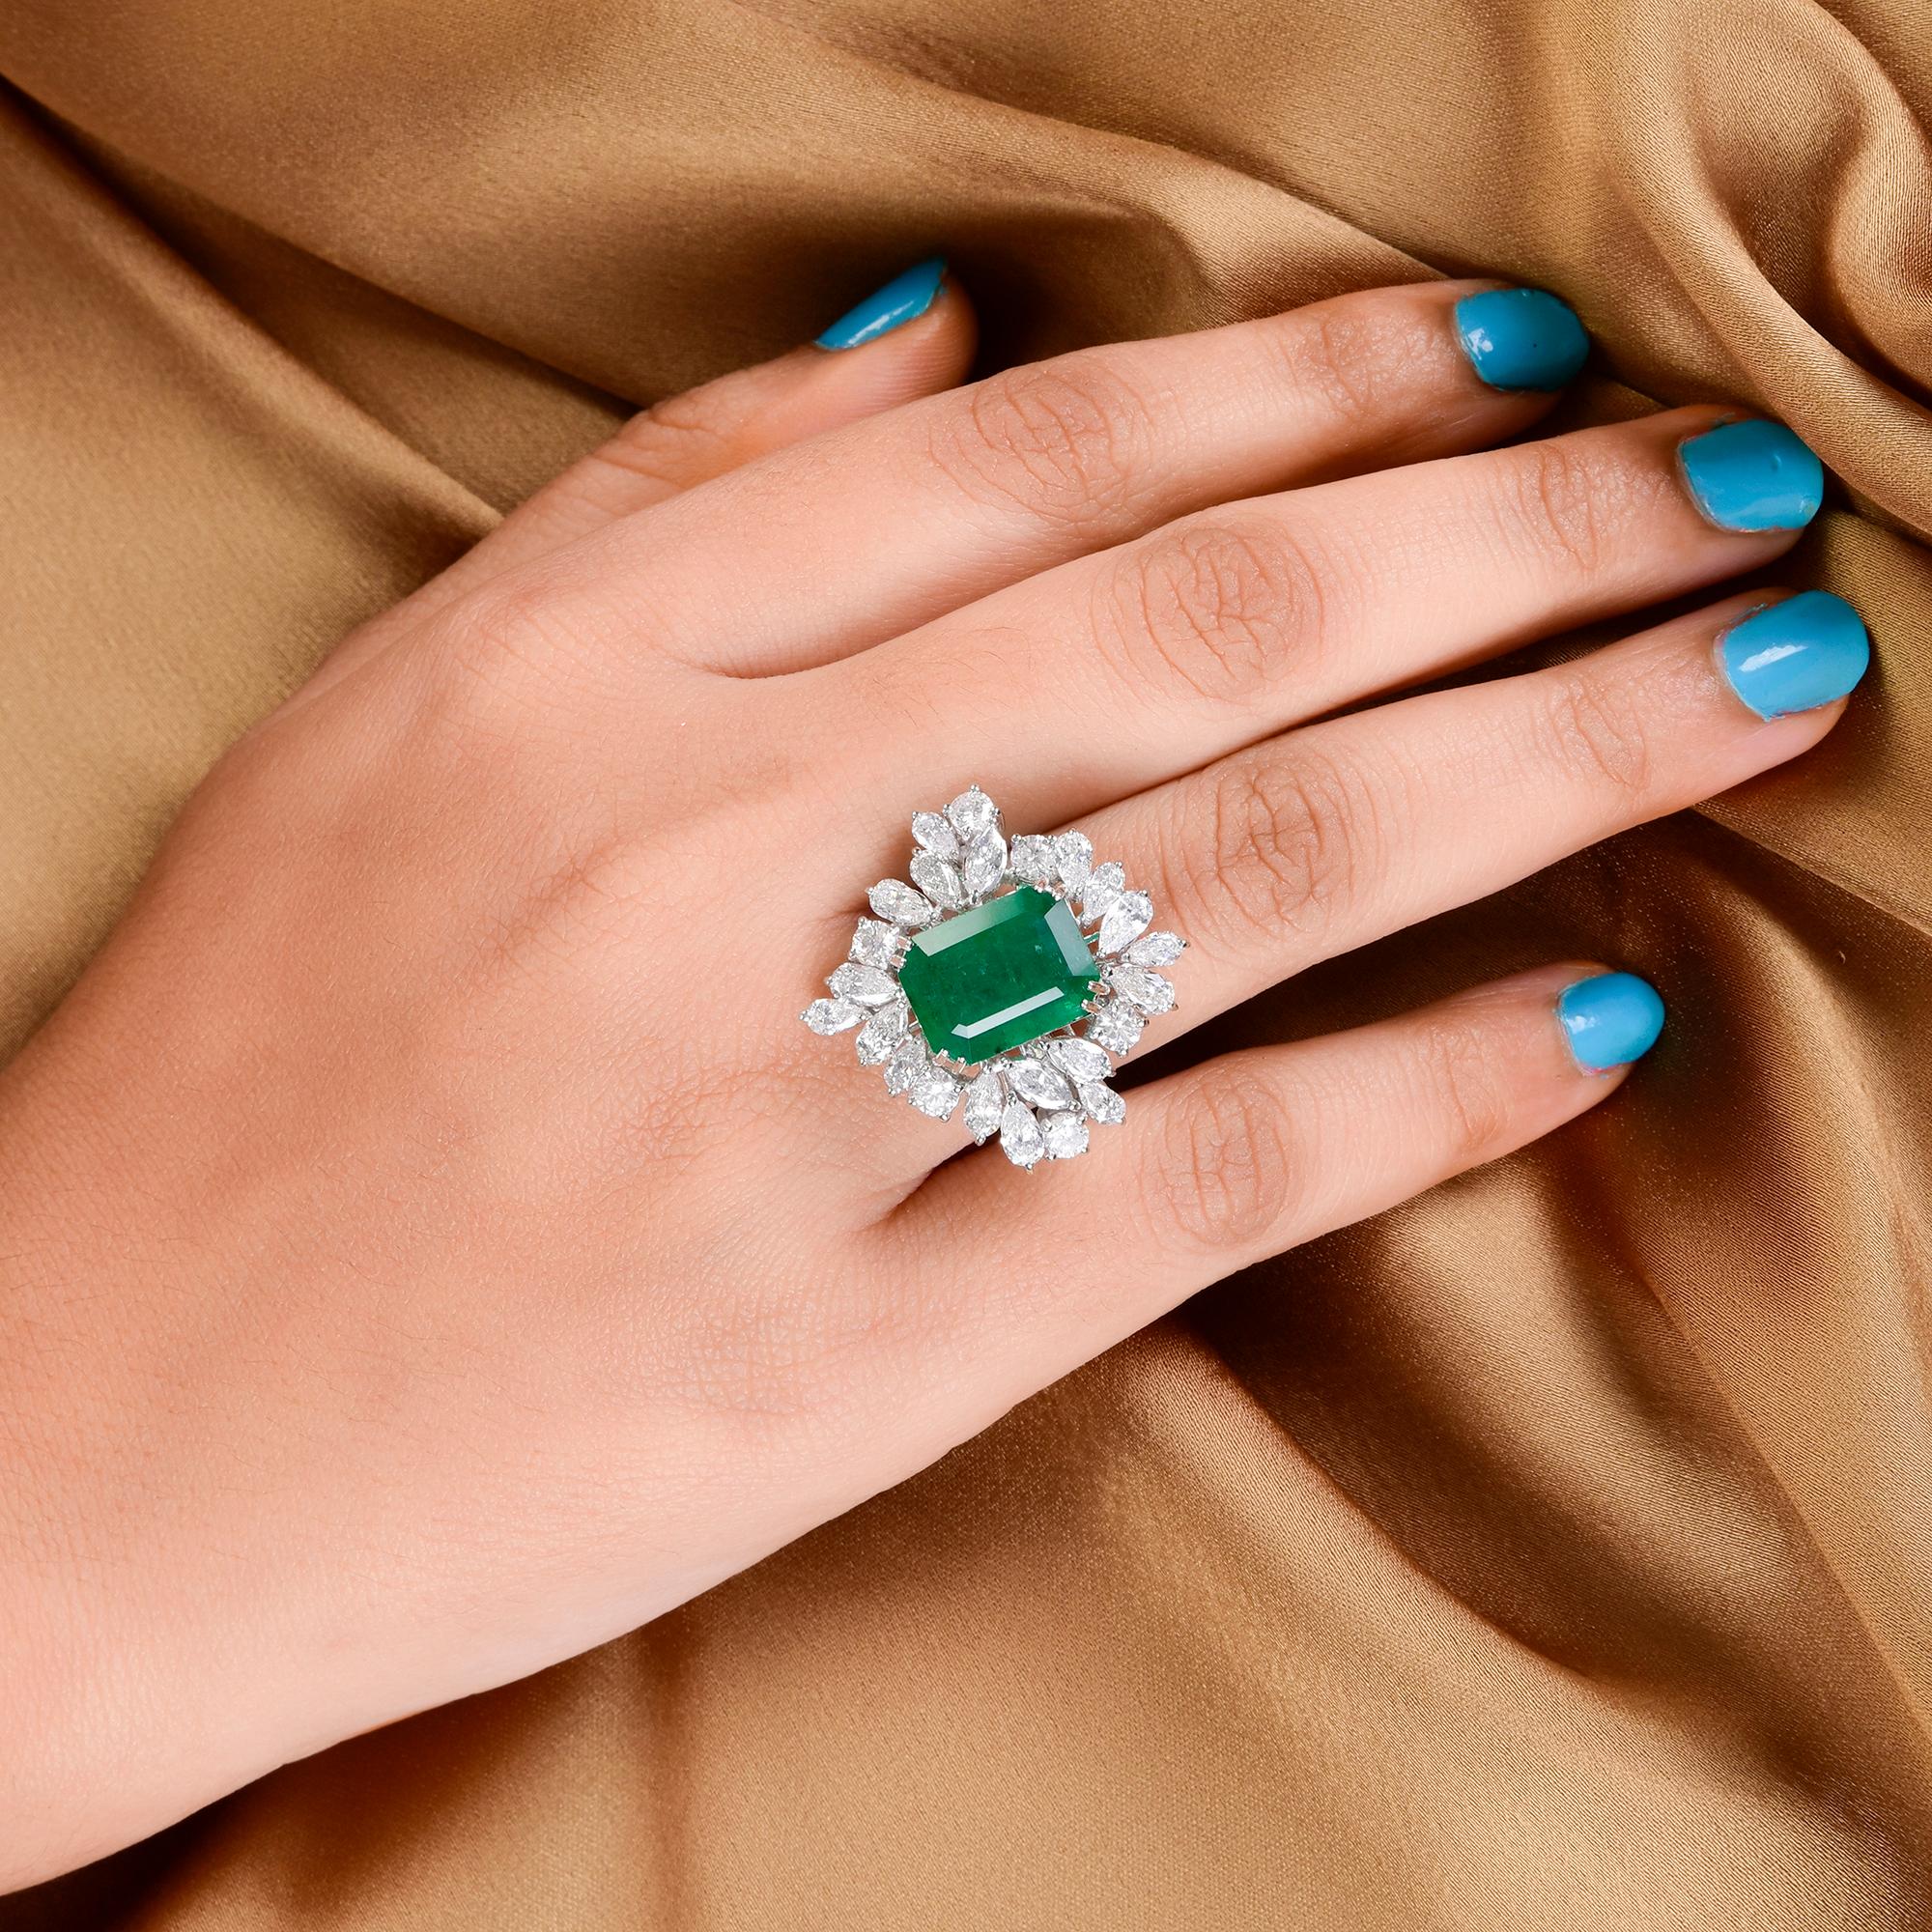 Women's Zambian Emerald Gemstone Cocktail Ring Diamond 14 Karat White Gold Fine Jewelry For Sale